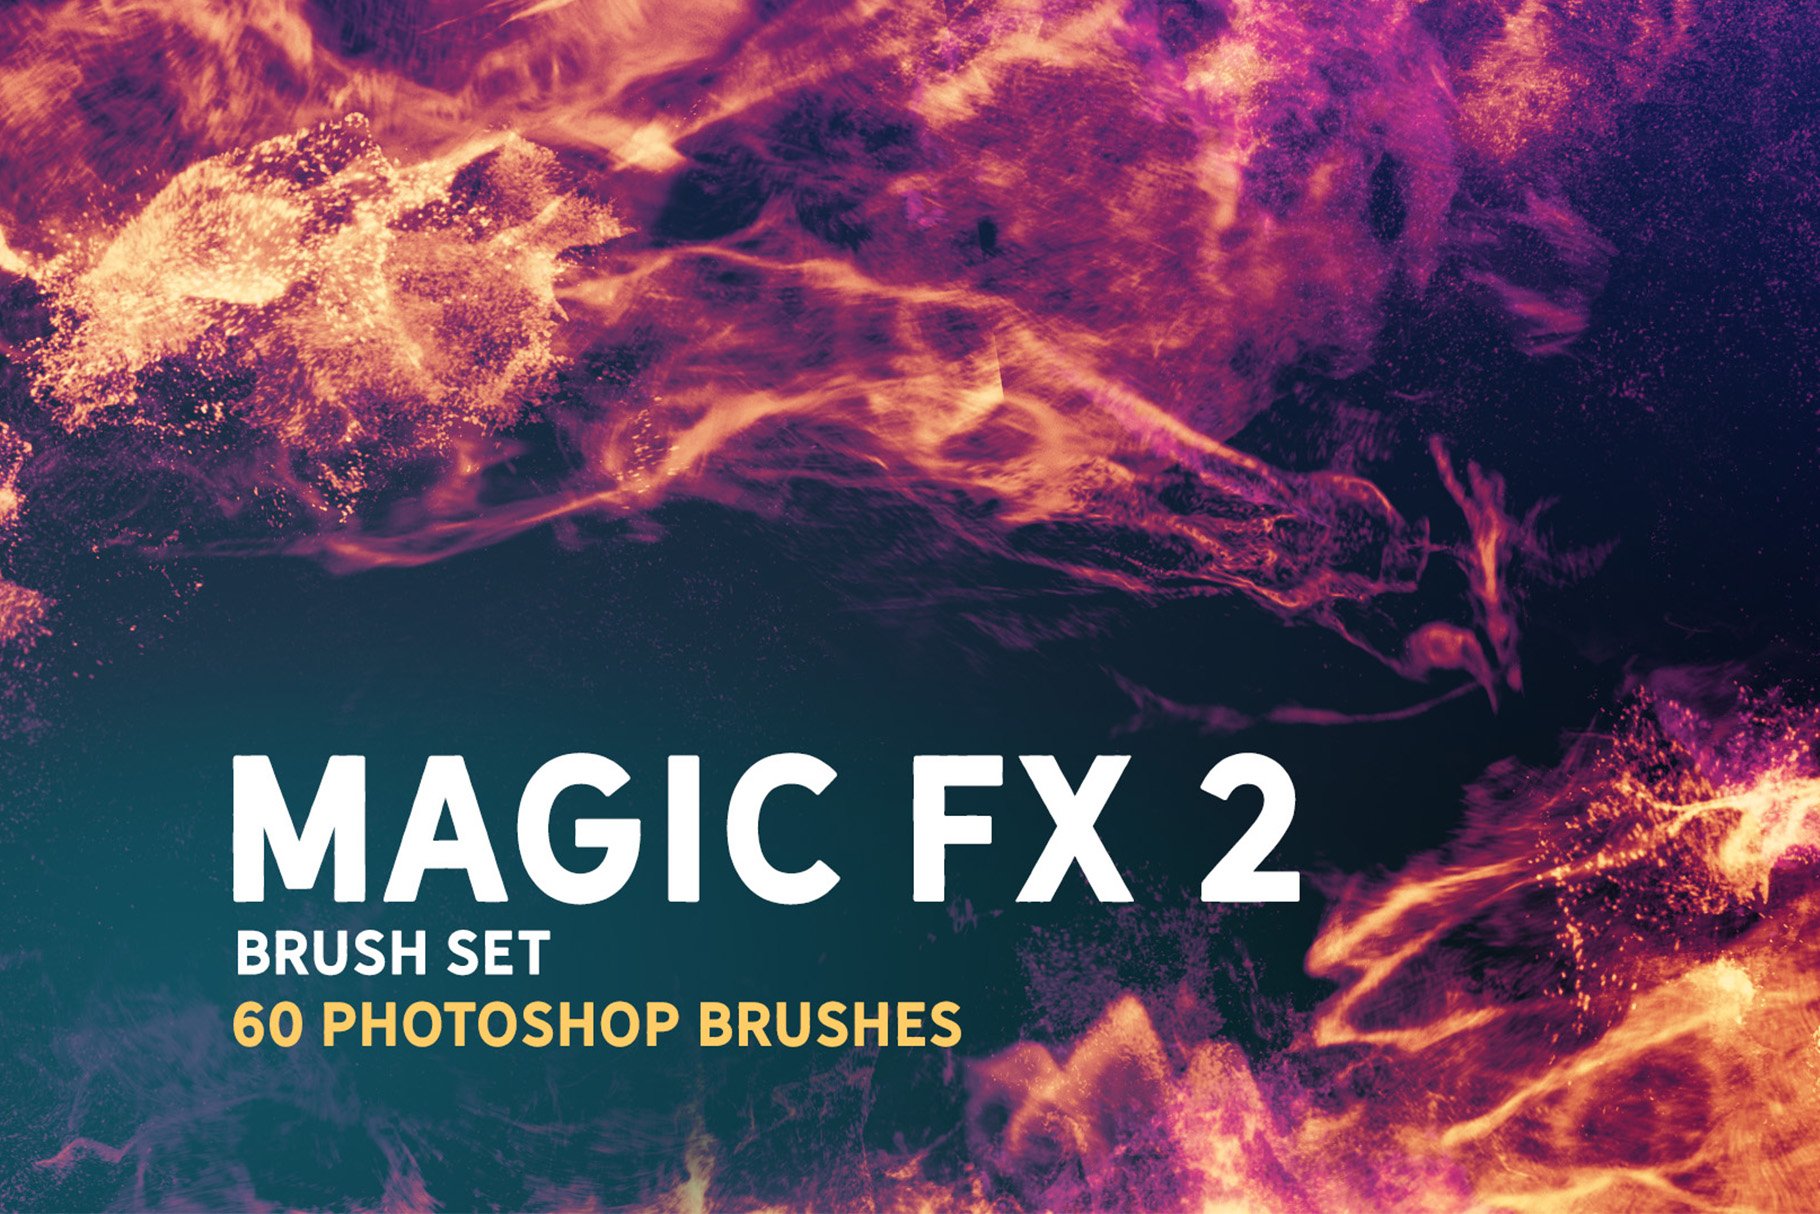 Magic FX 2 brush setcover image.